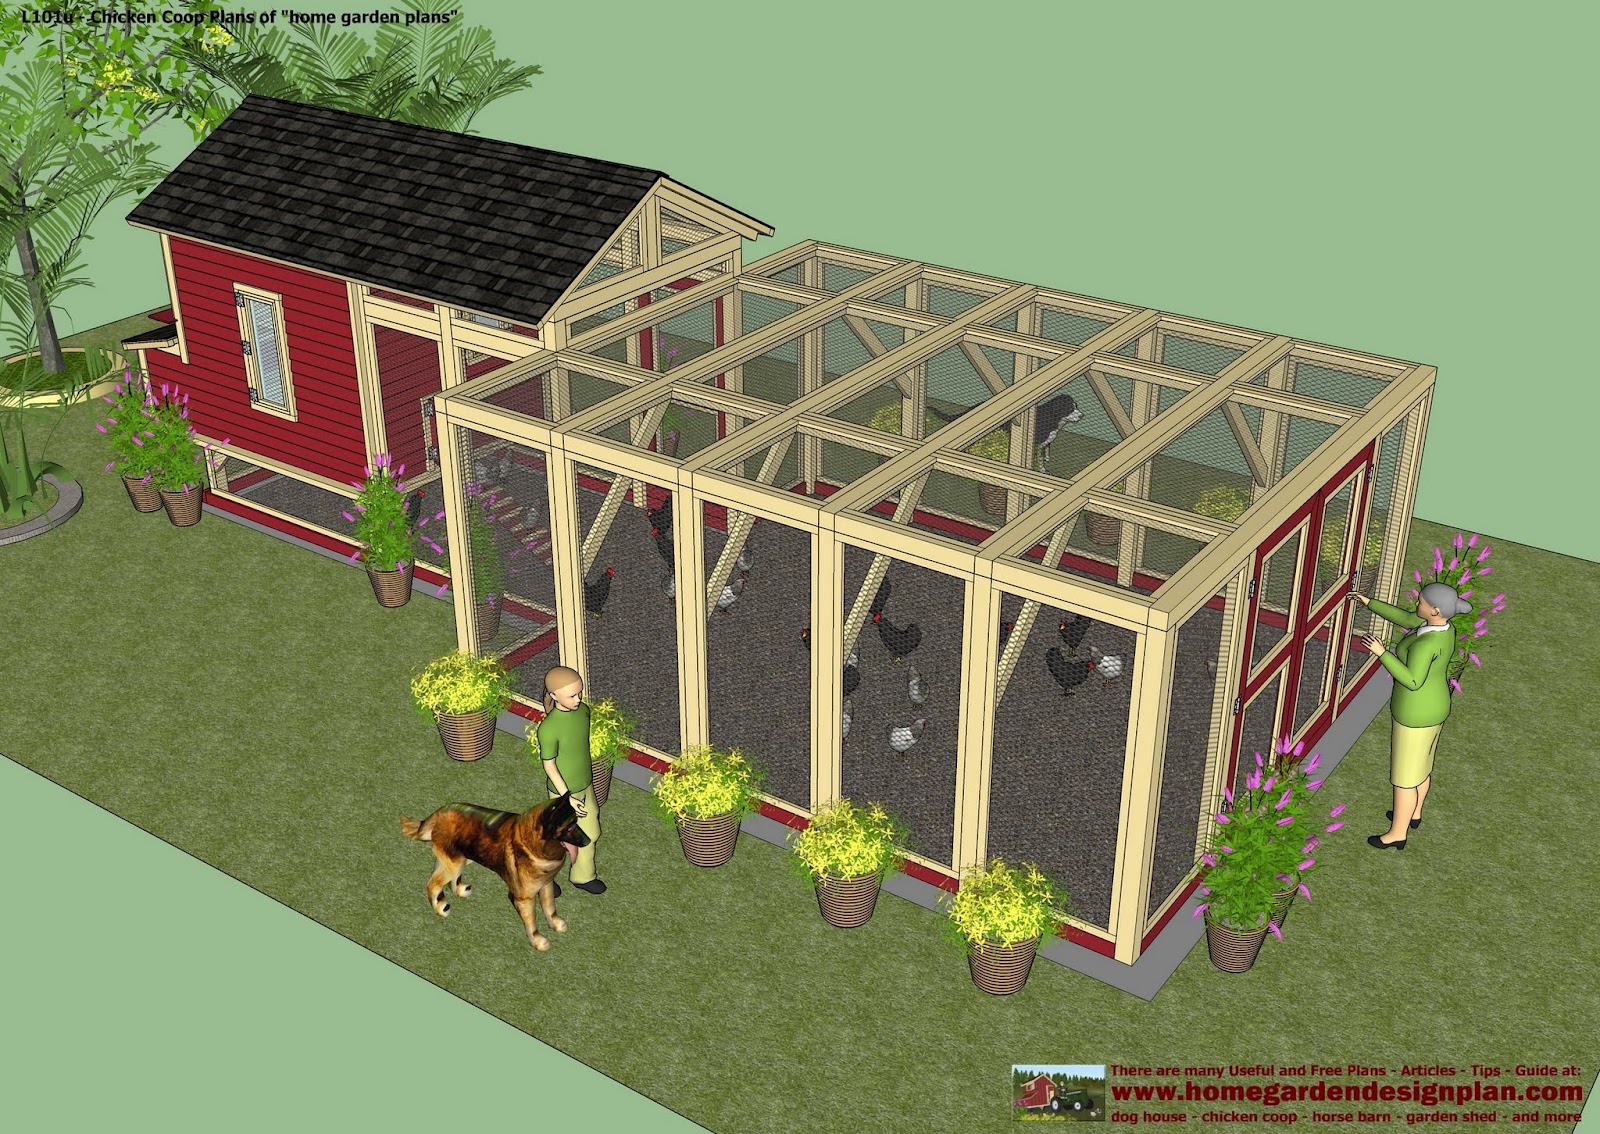 Chicken Coop Plans Construction - Chicken Coop Design - How To Build ...